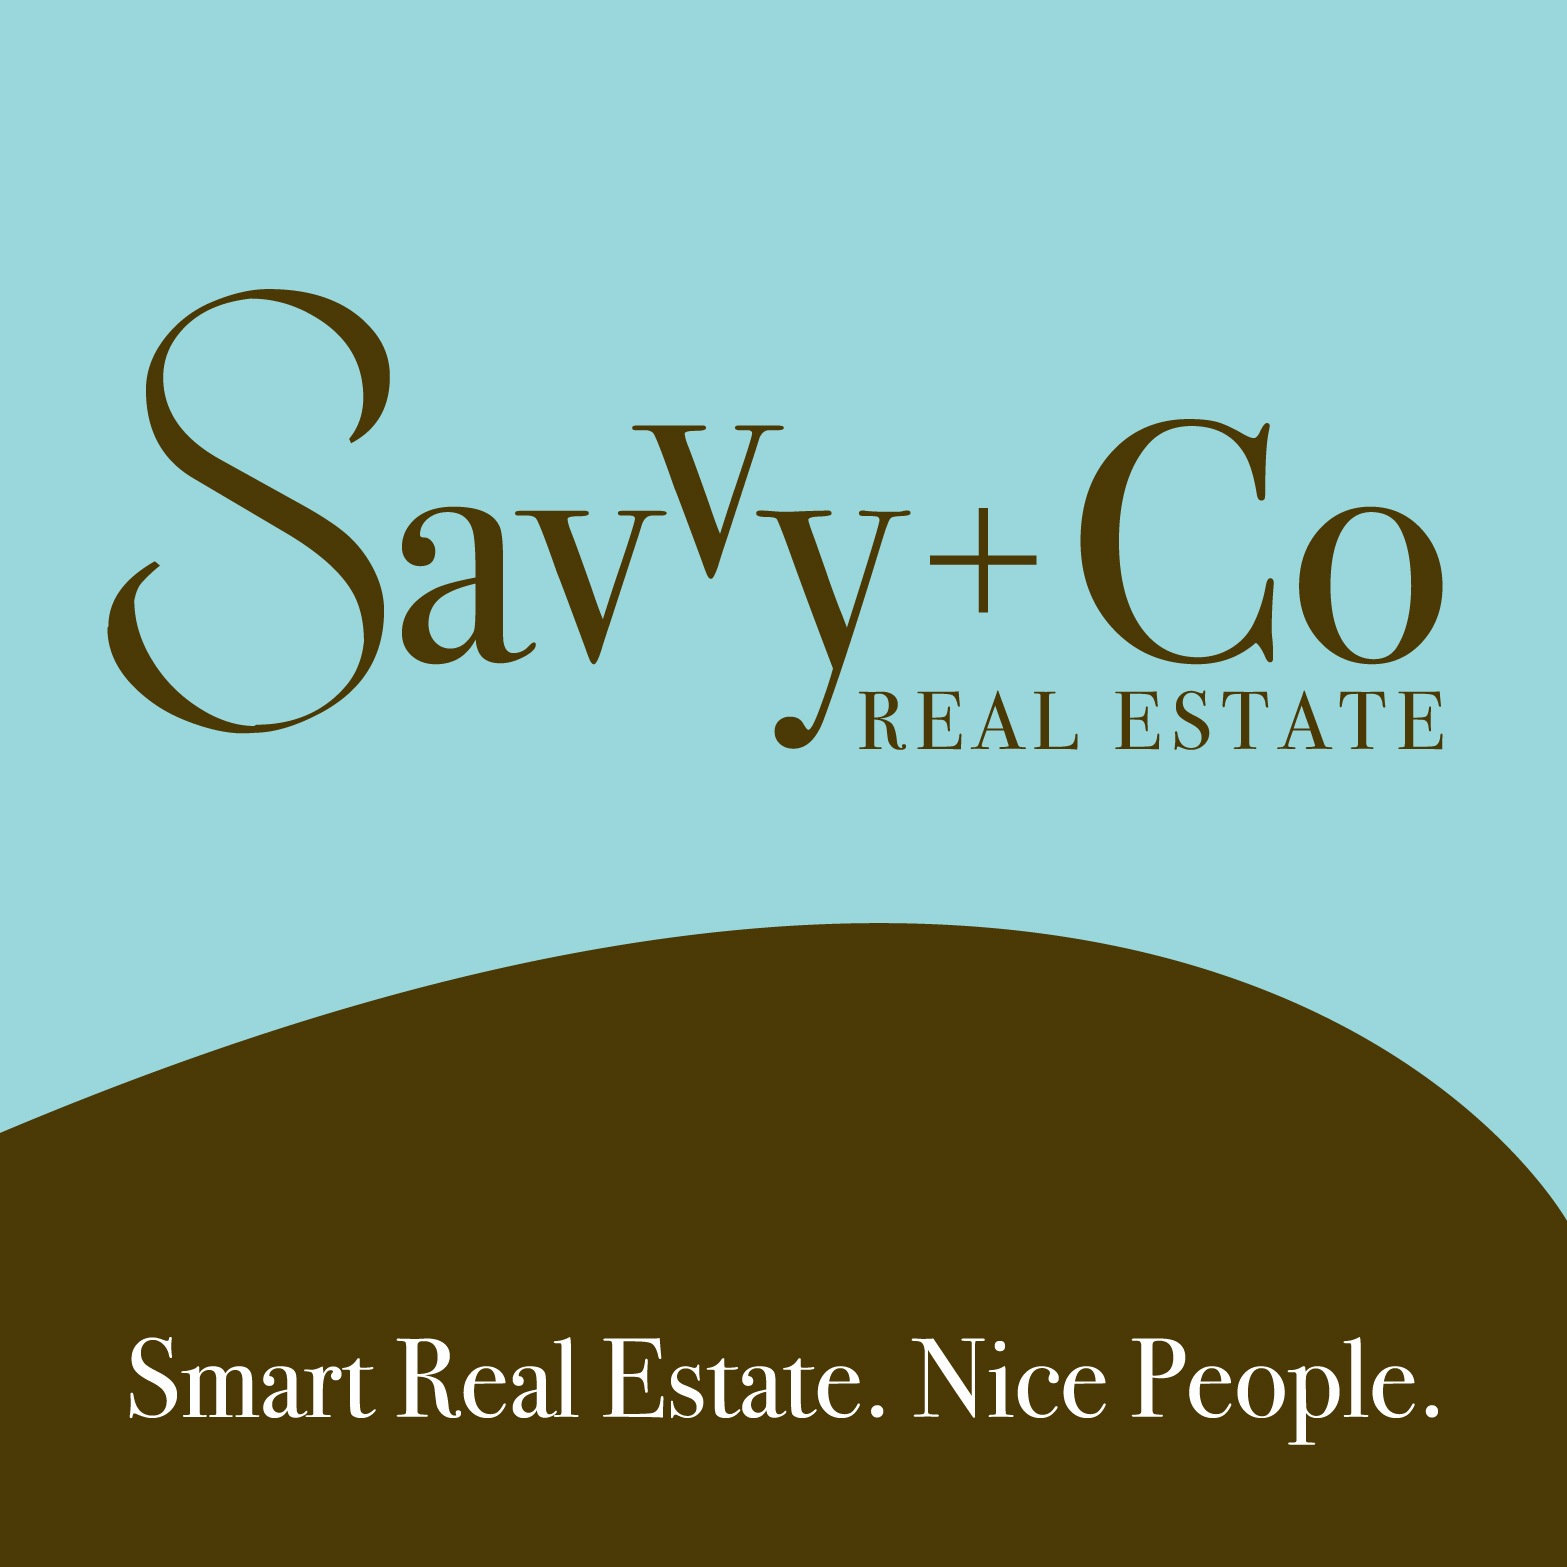 Savvy Logo - Savvy + Co. Real Estate. Charlotte, NC Real Estate Experts